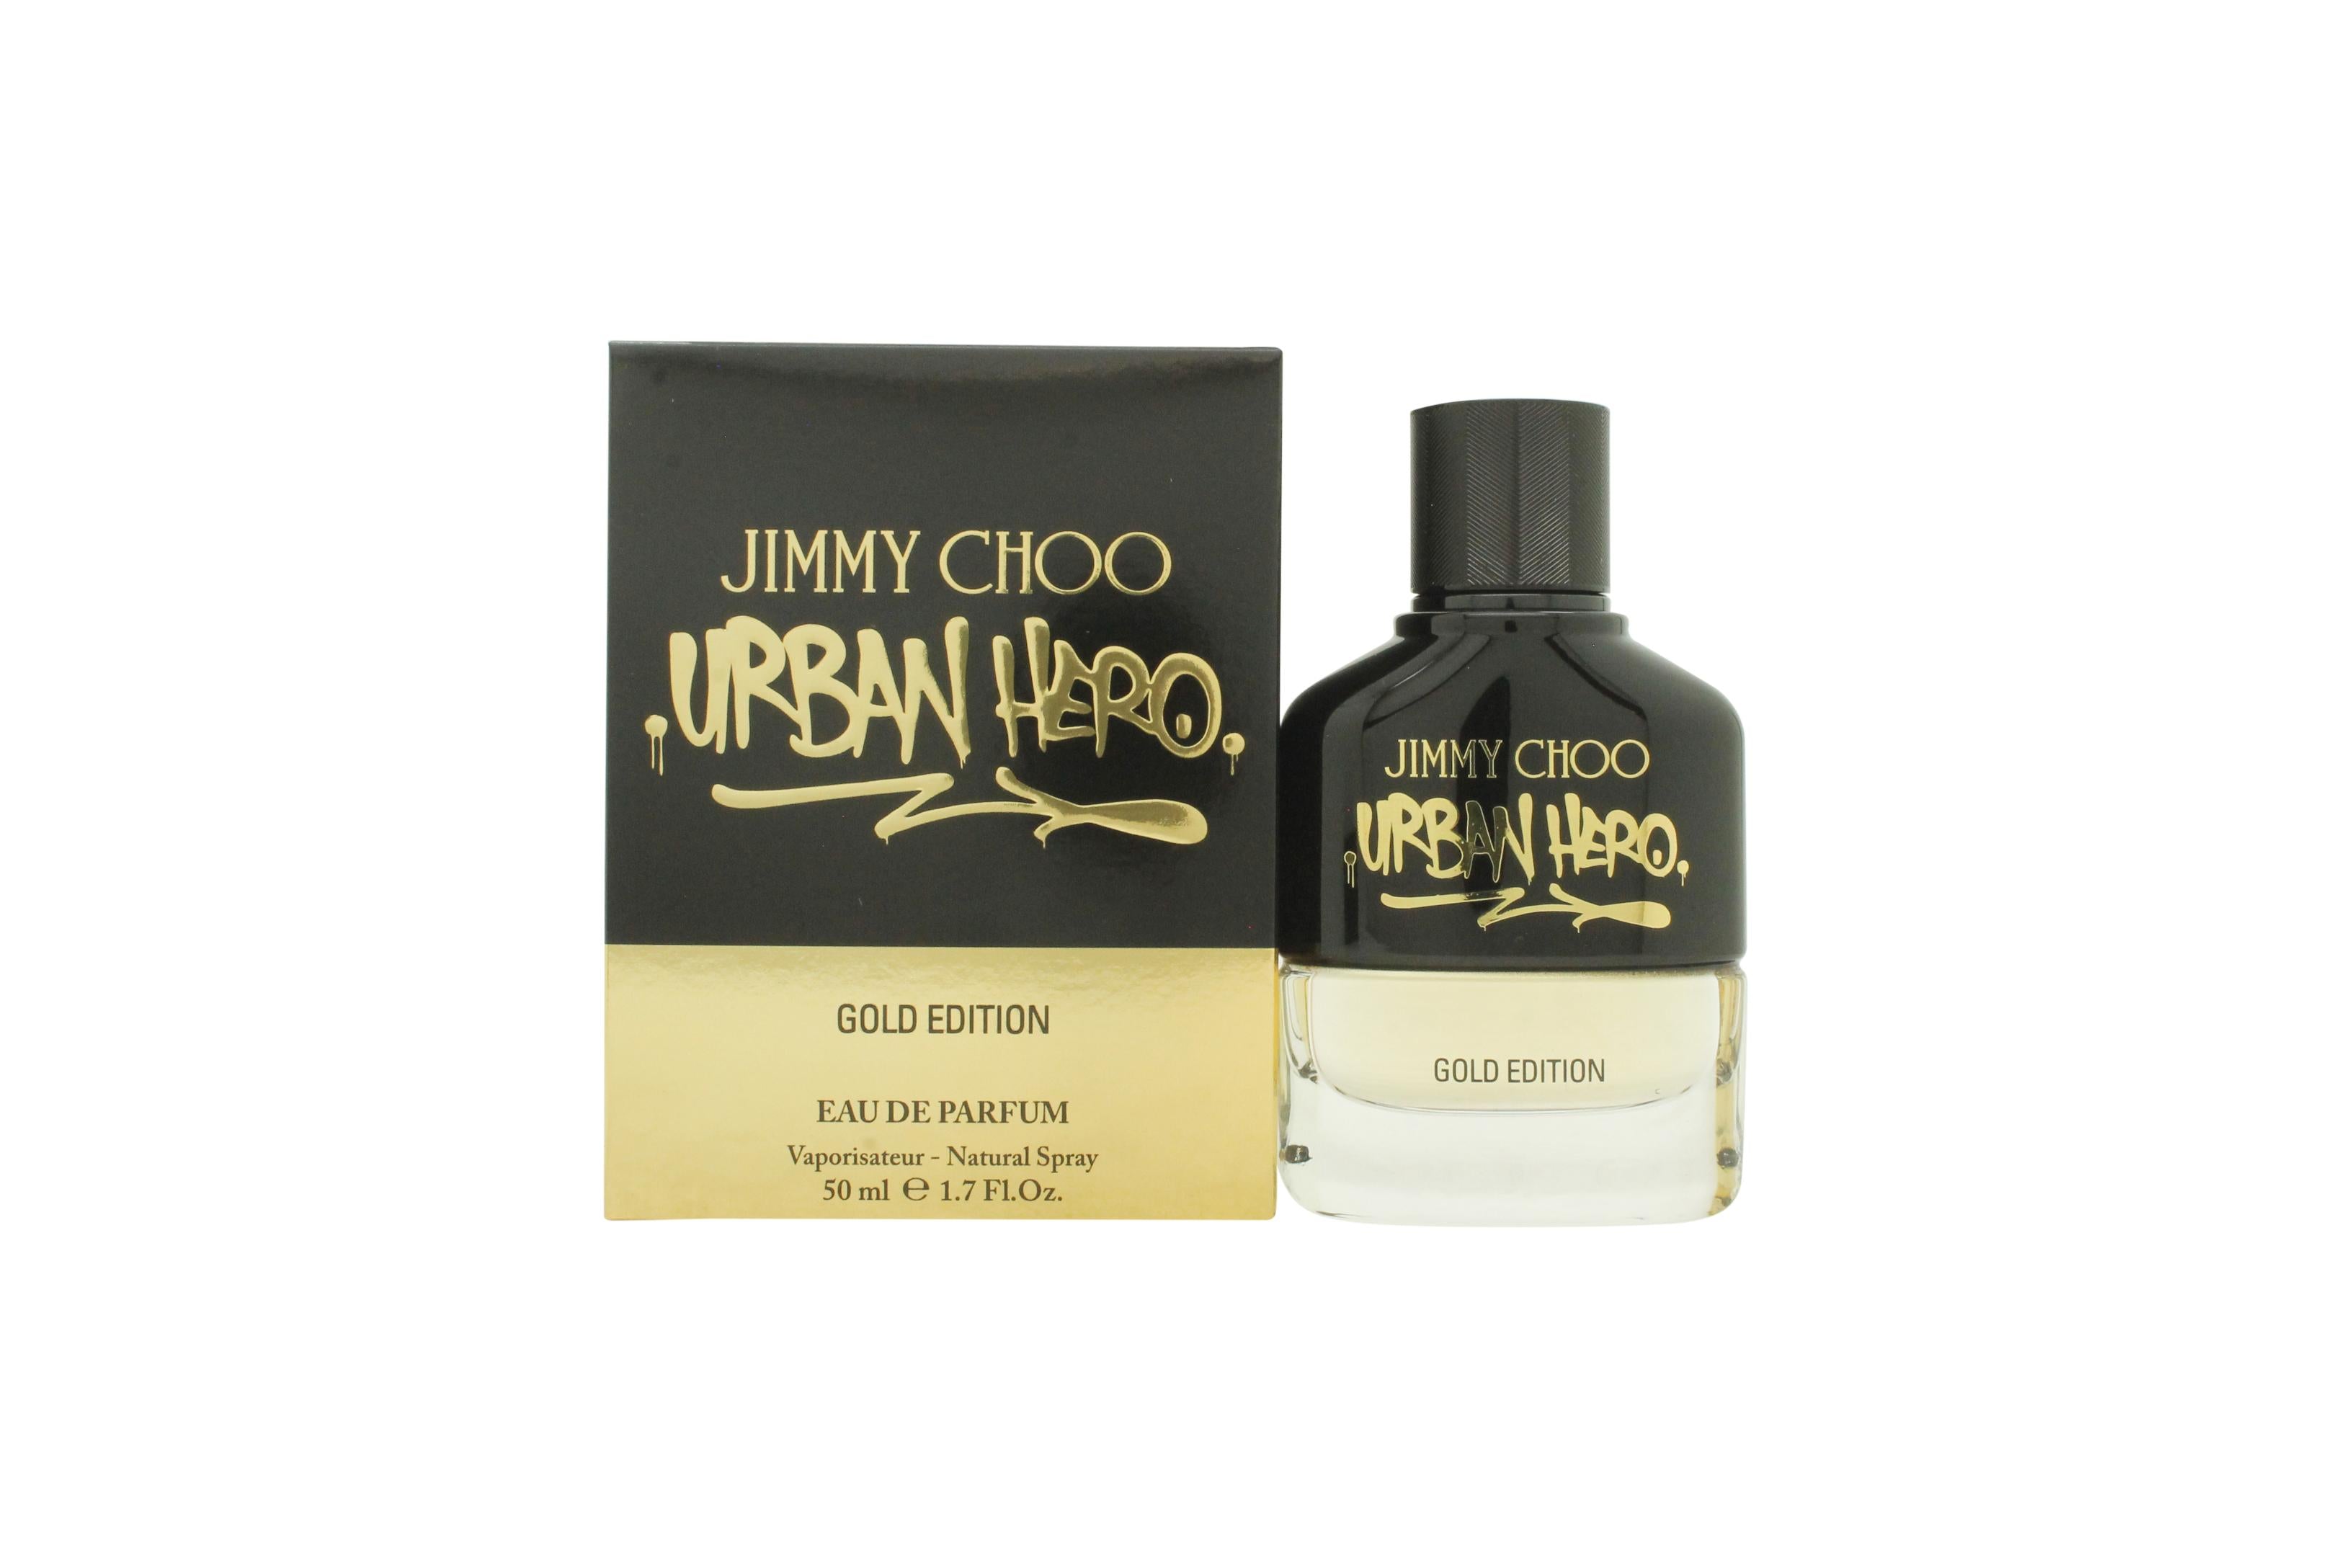 View Jimmy Choo Urban Hero Gold Edition Eau de Parfum 50ml Spray information